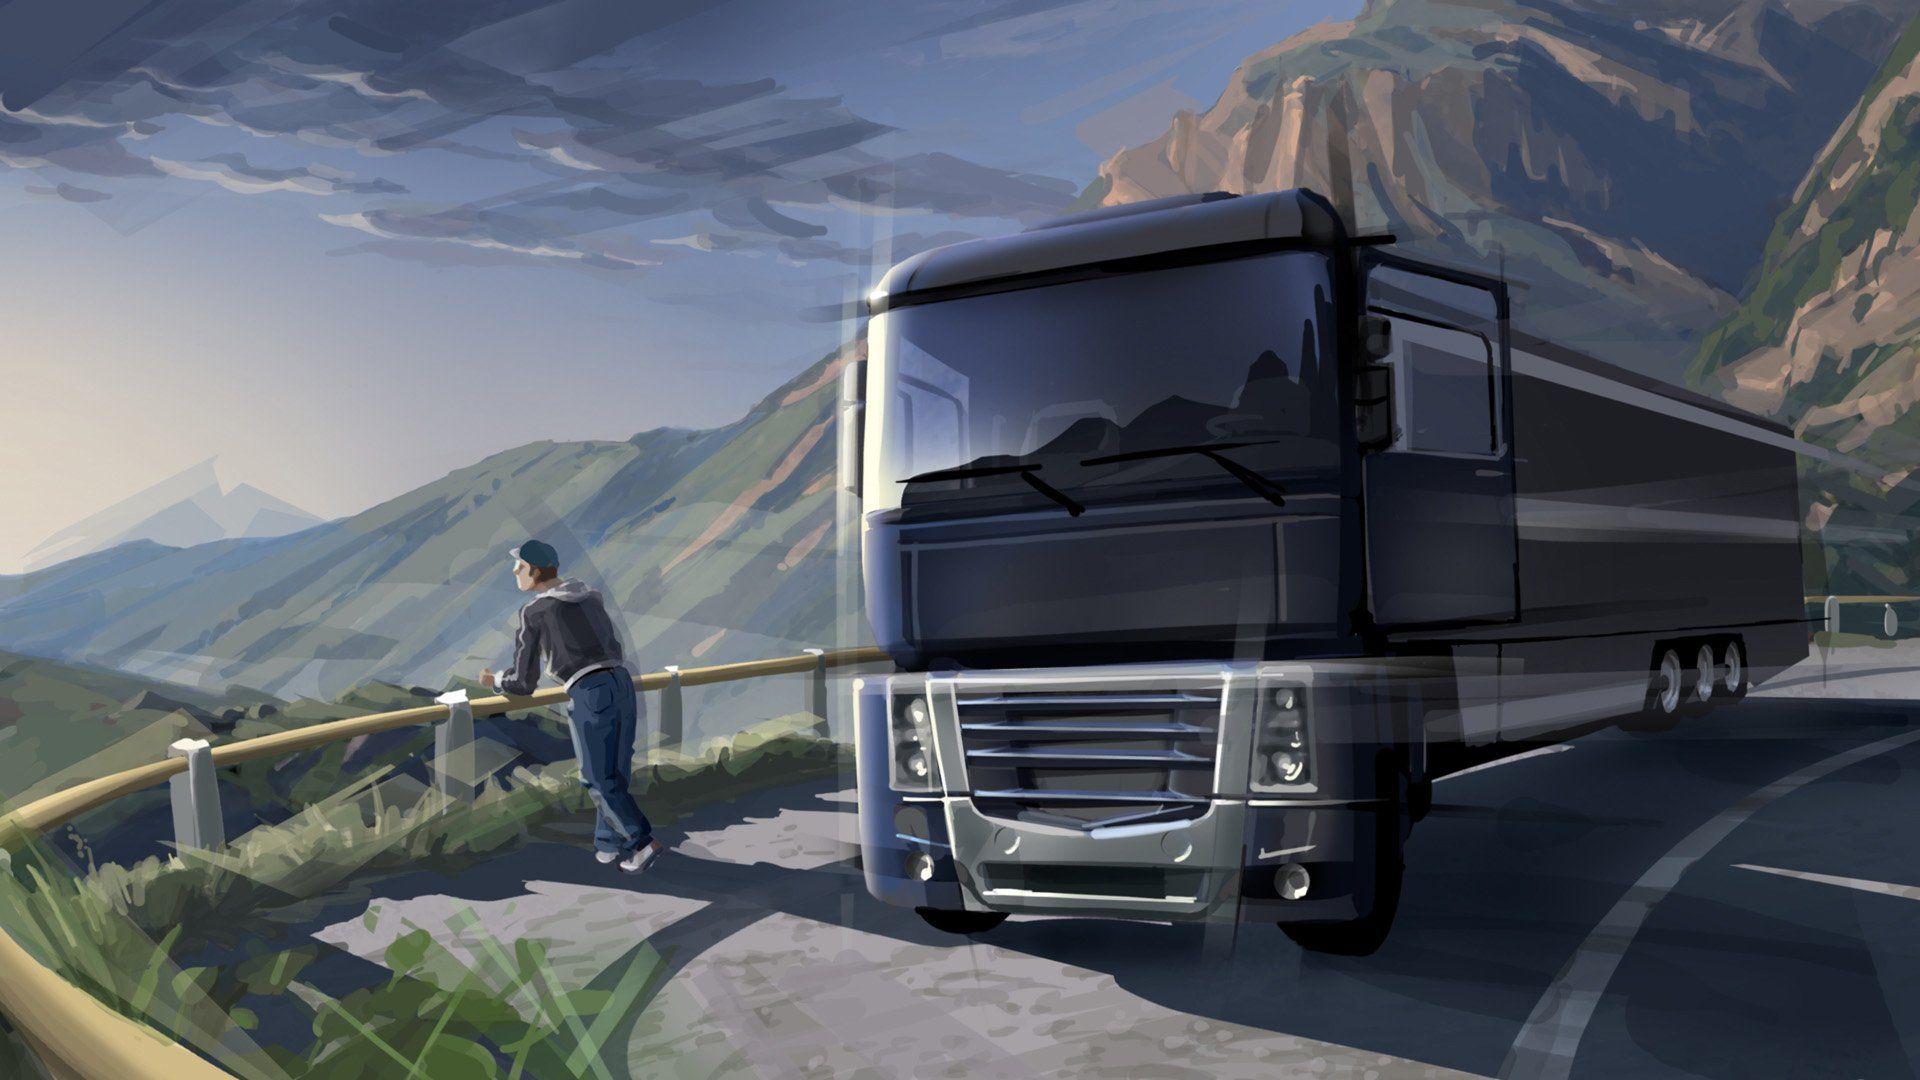 Euro Truck Simulator 2 HD Wallpaper